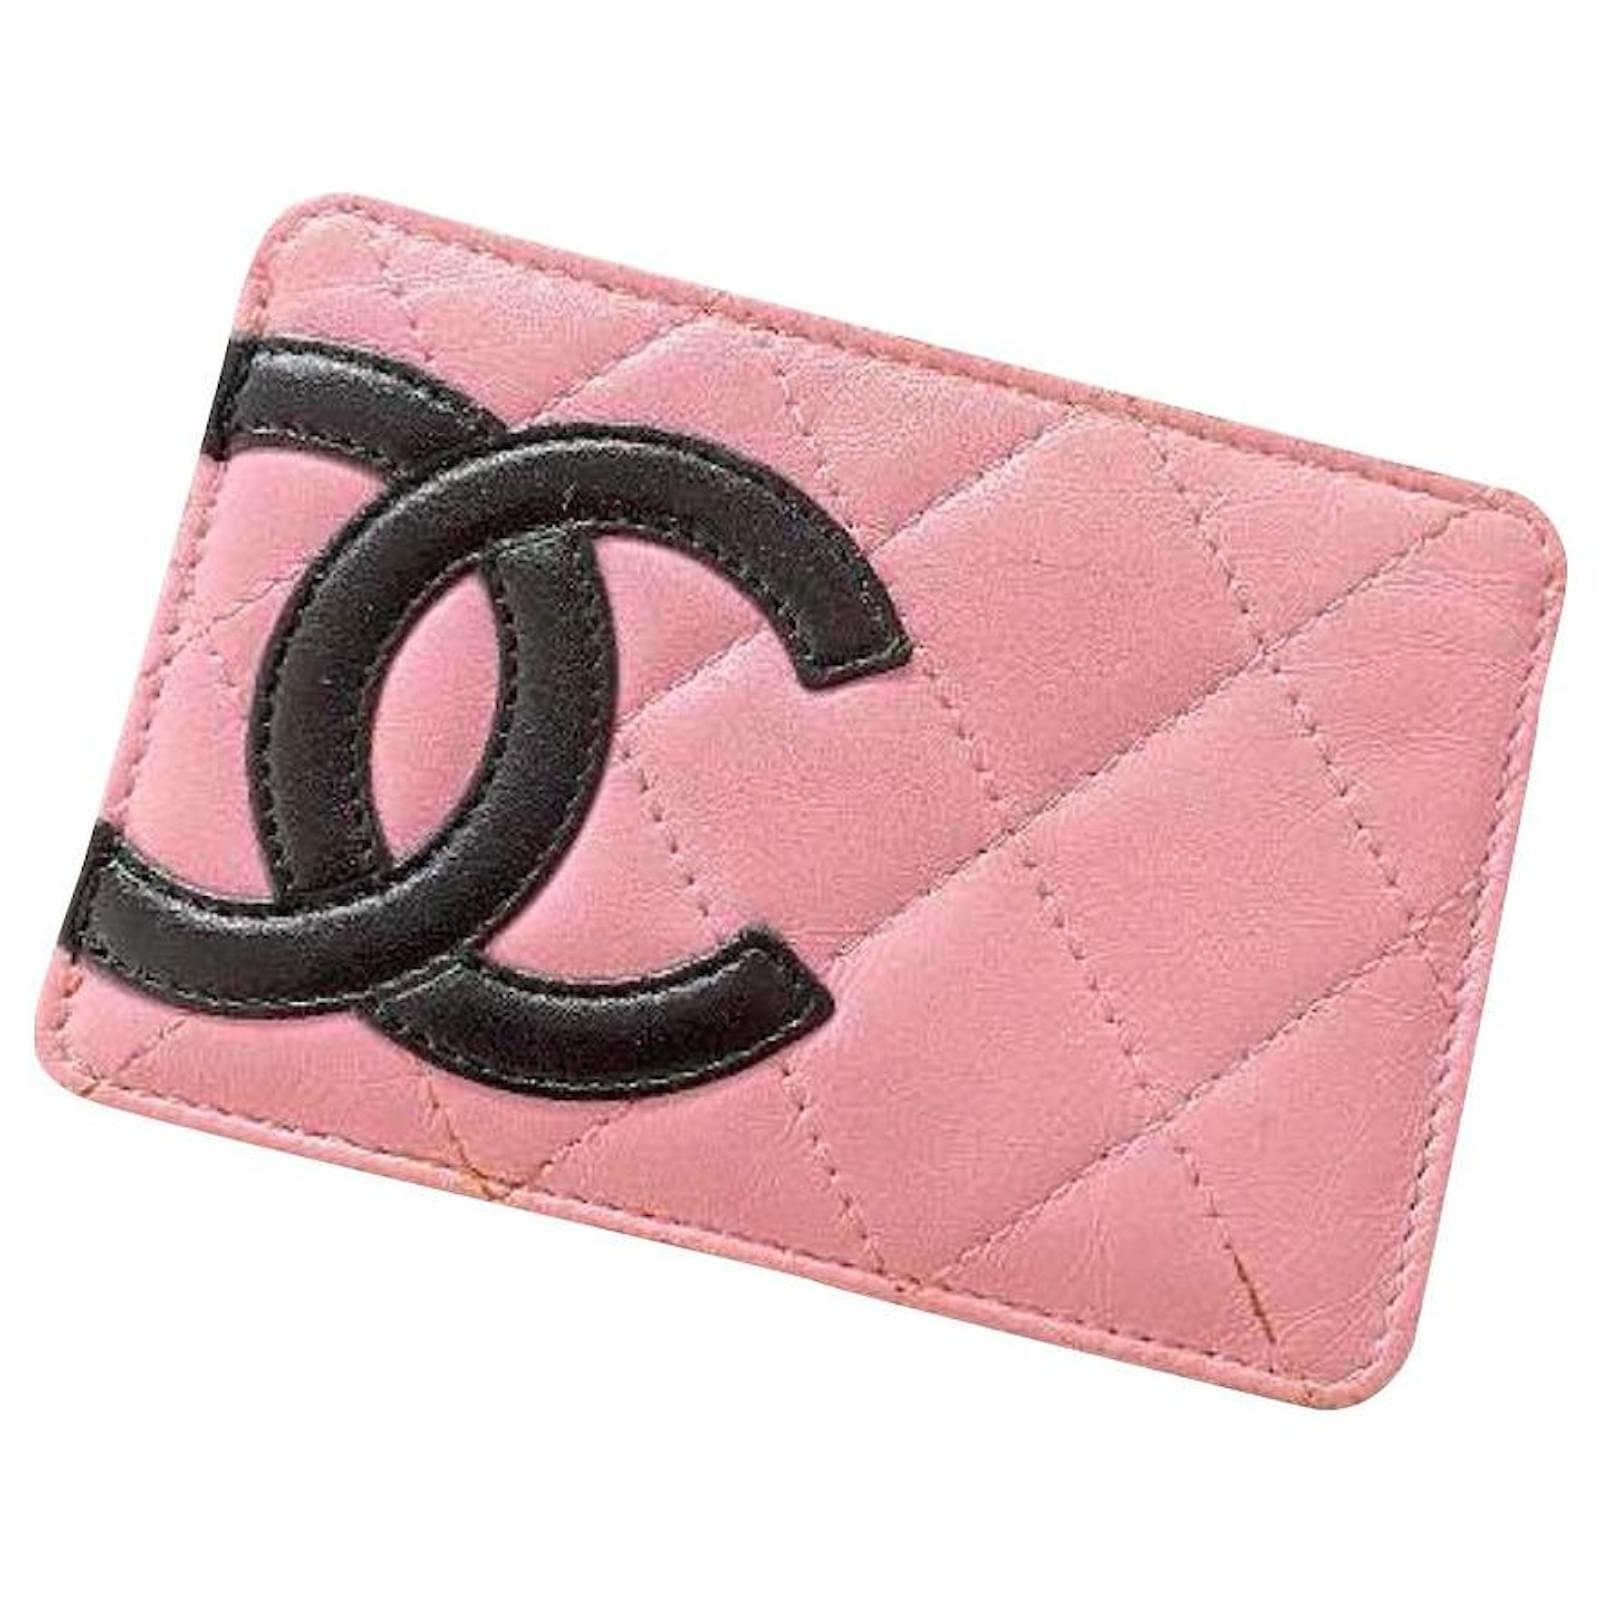 Chanel Wallet Black & Pink